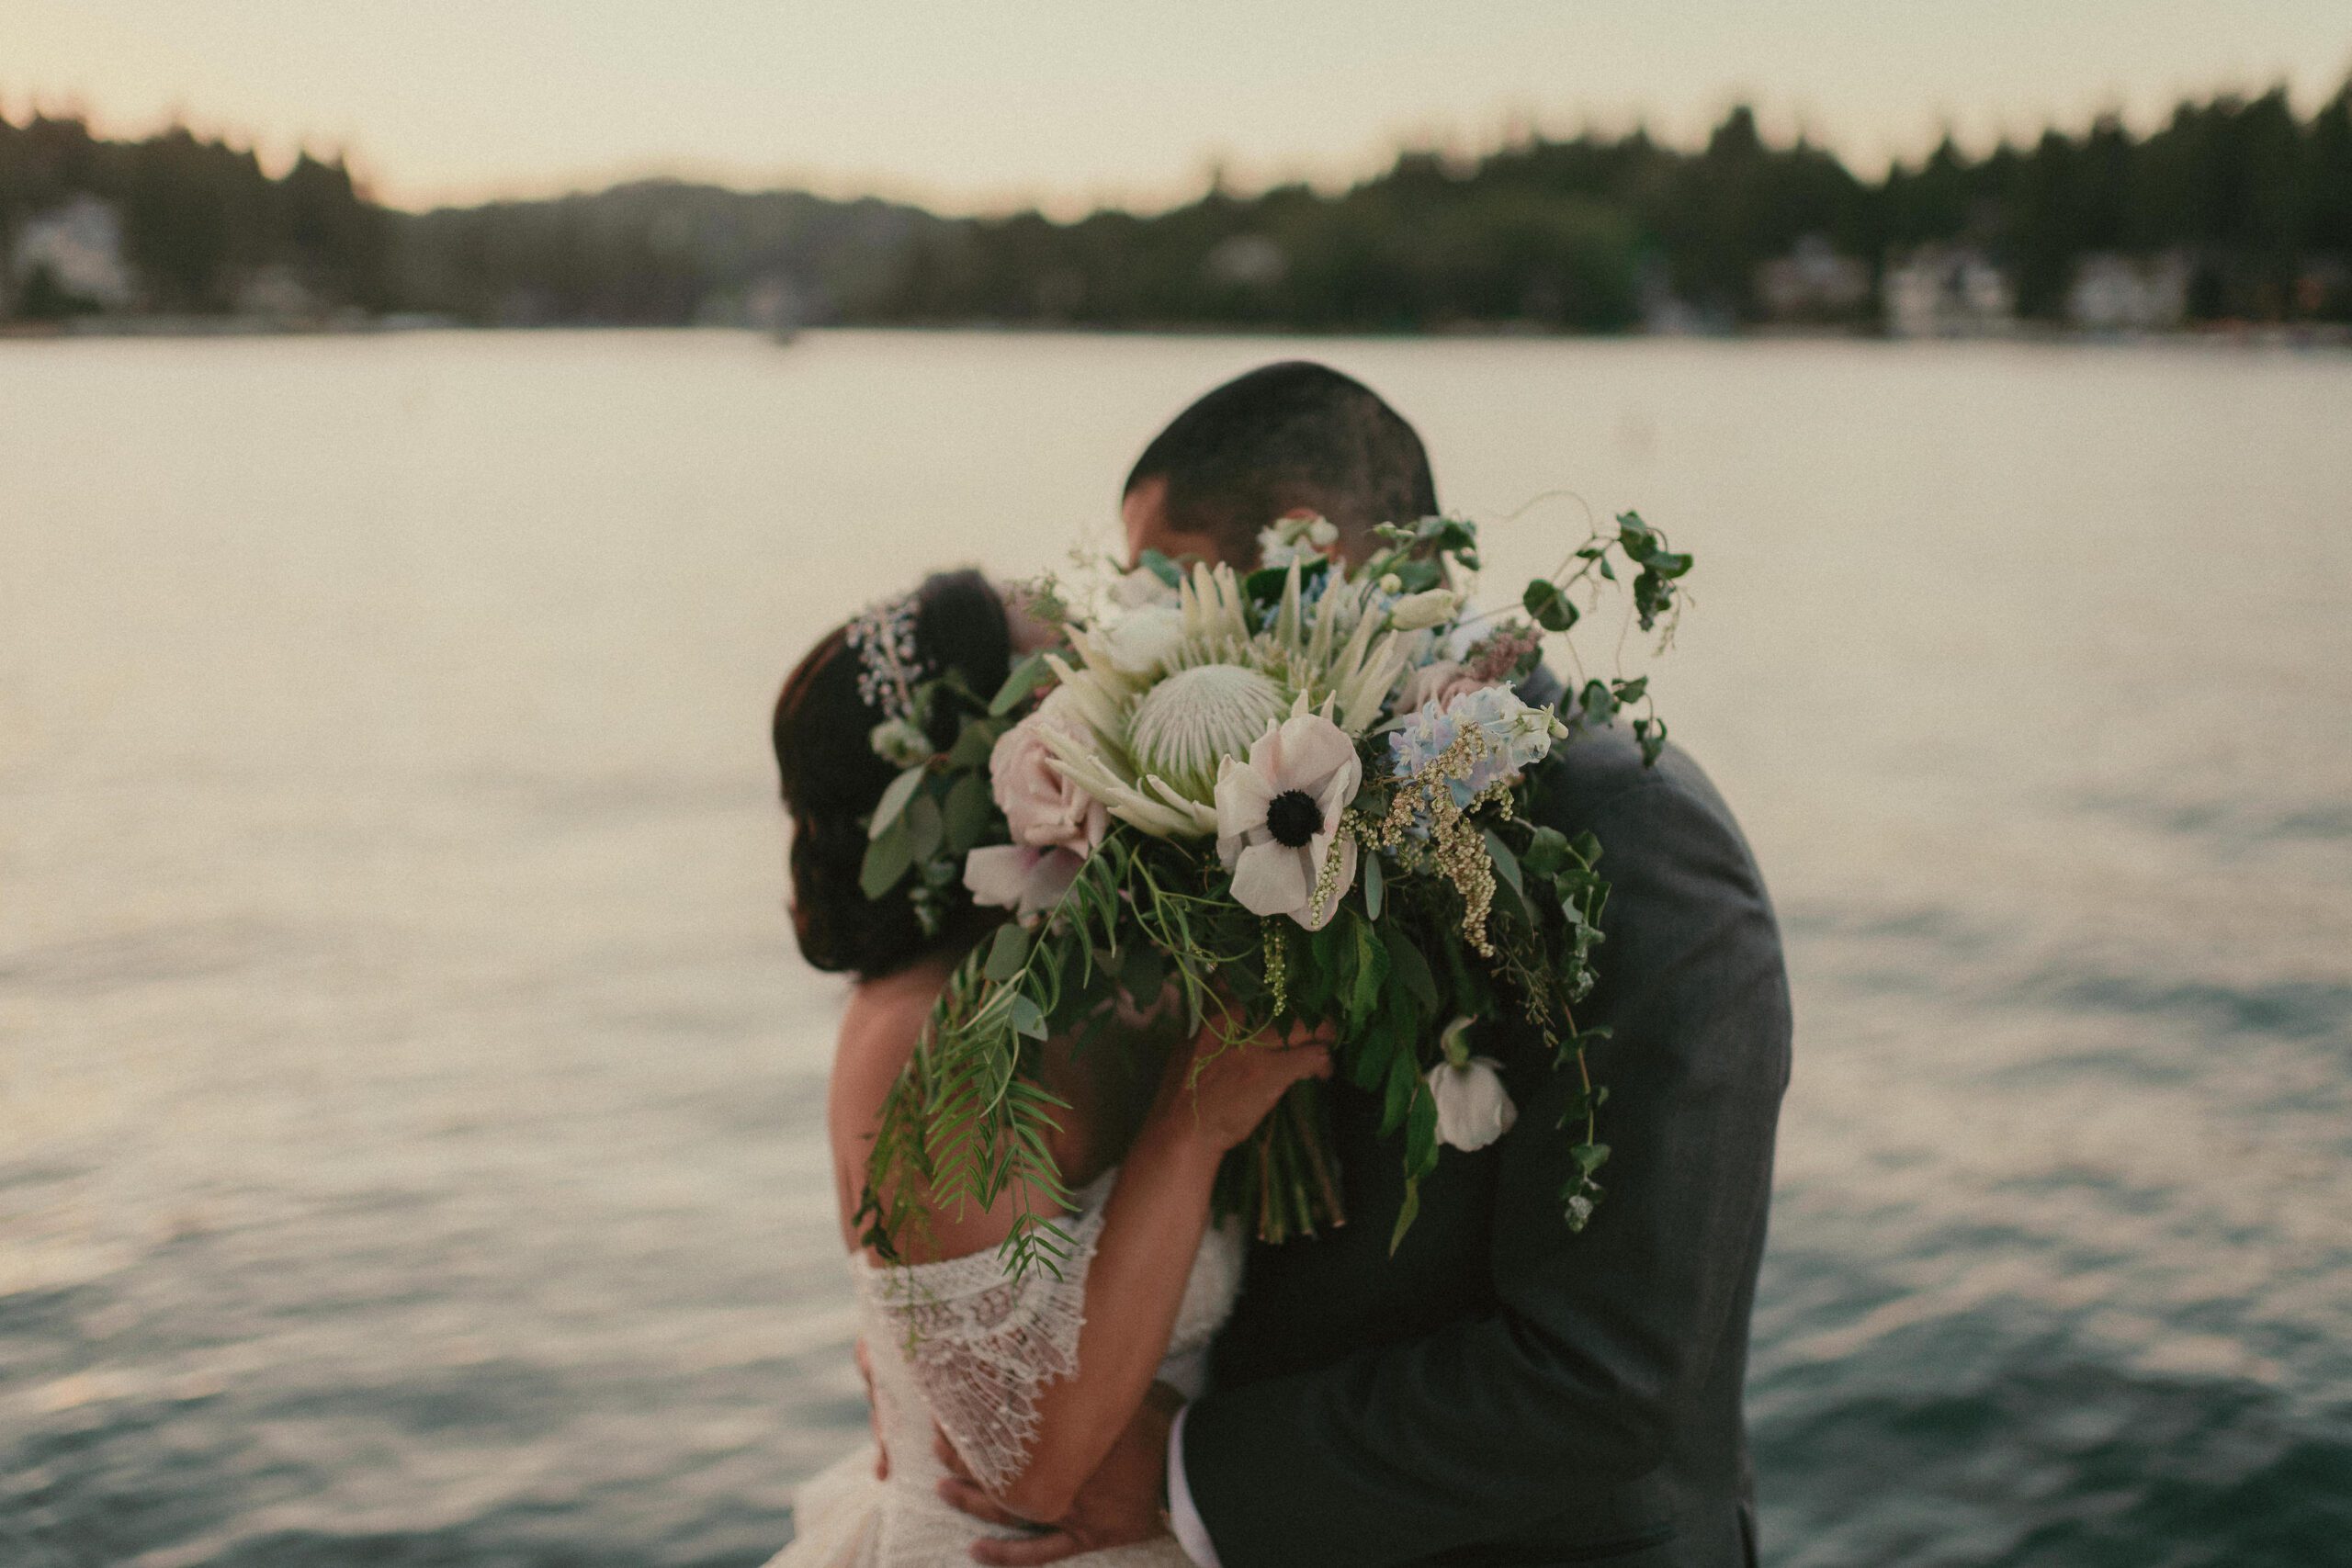 Lake Arrowhead Resort Wedding, San Luis Obispo Wedding Photographer, Lake Arrowhead Wedding, James Lester Photography